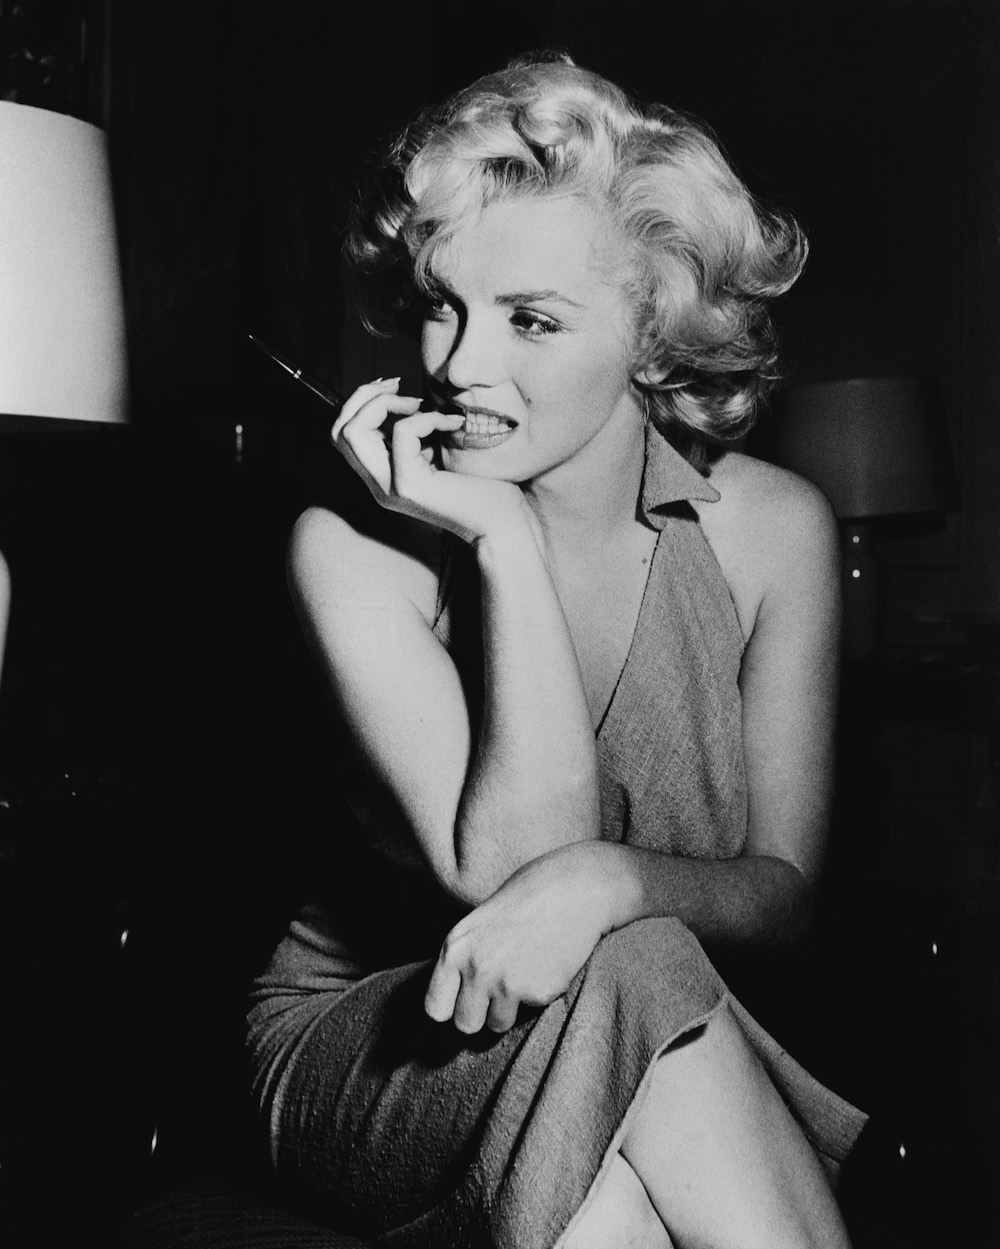  Marilyn Monroe (Fot. Keystone Features / Stringer, Getty Images)